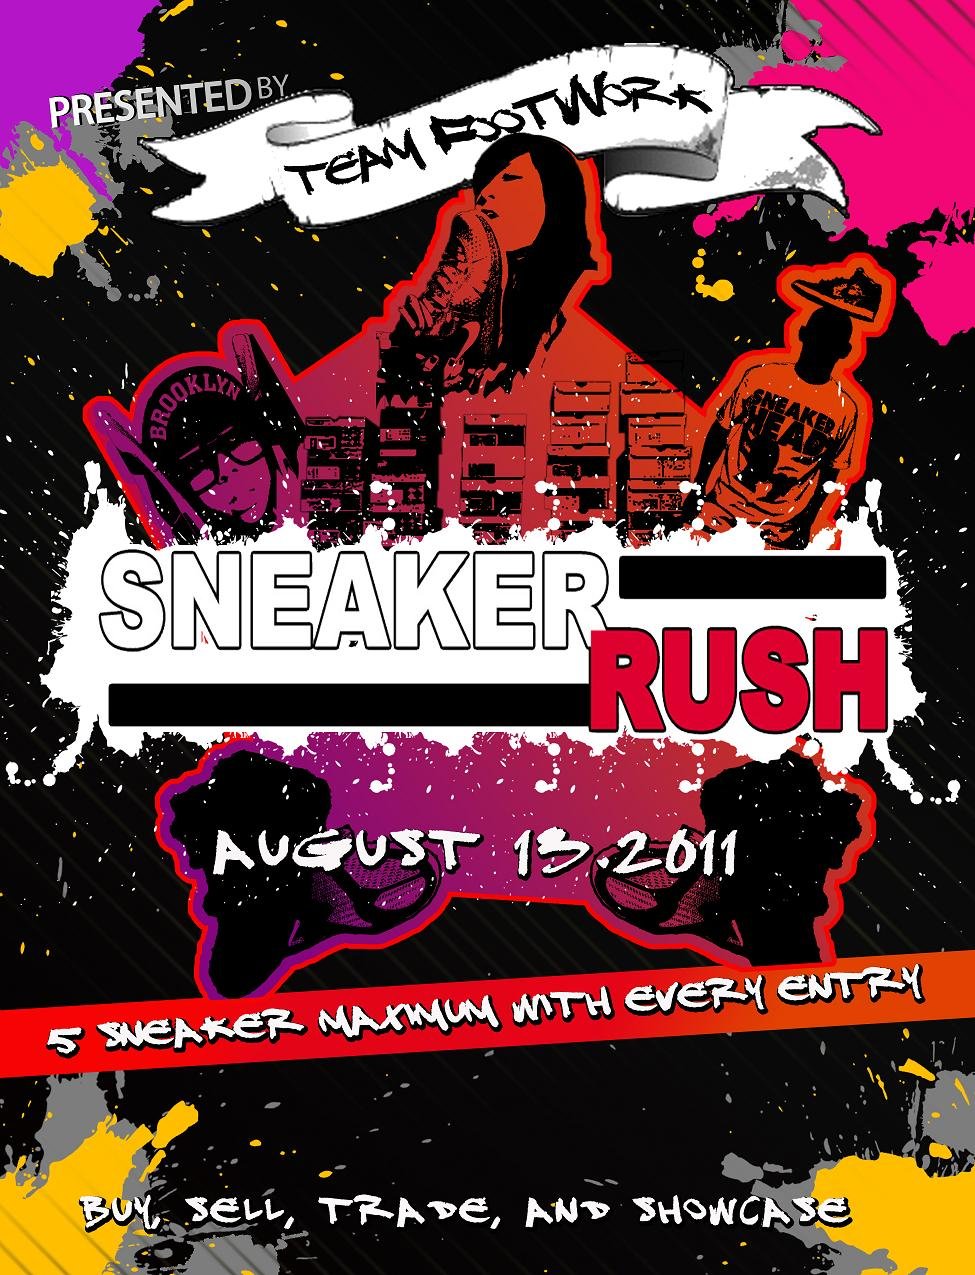 Sneaker Event- SneakerRush West Palm Beach, FL